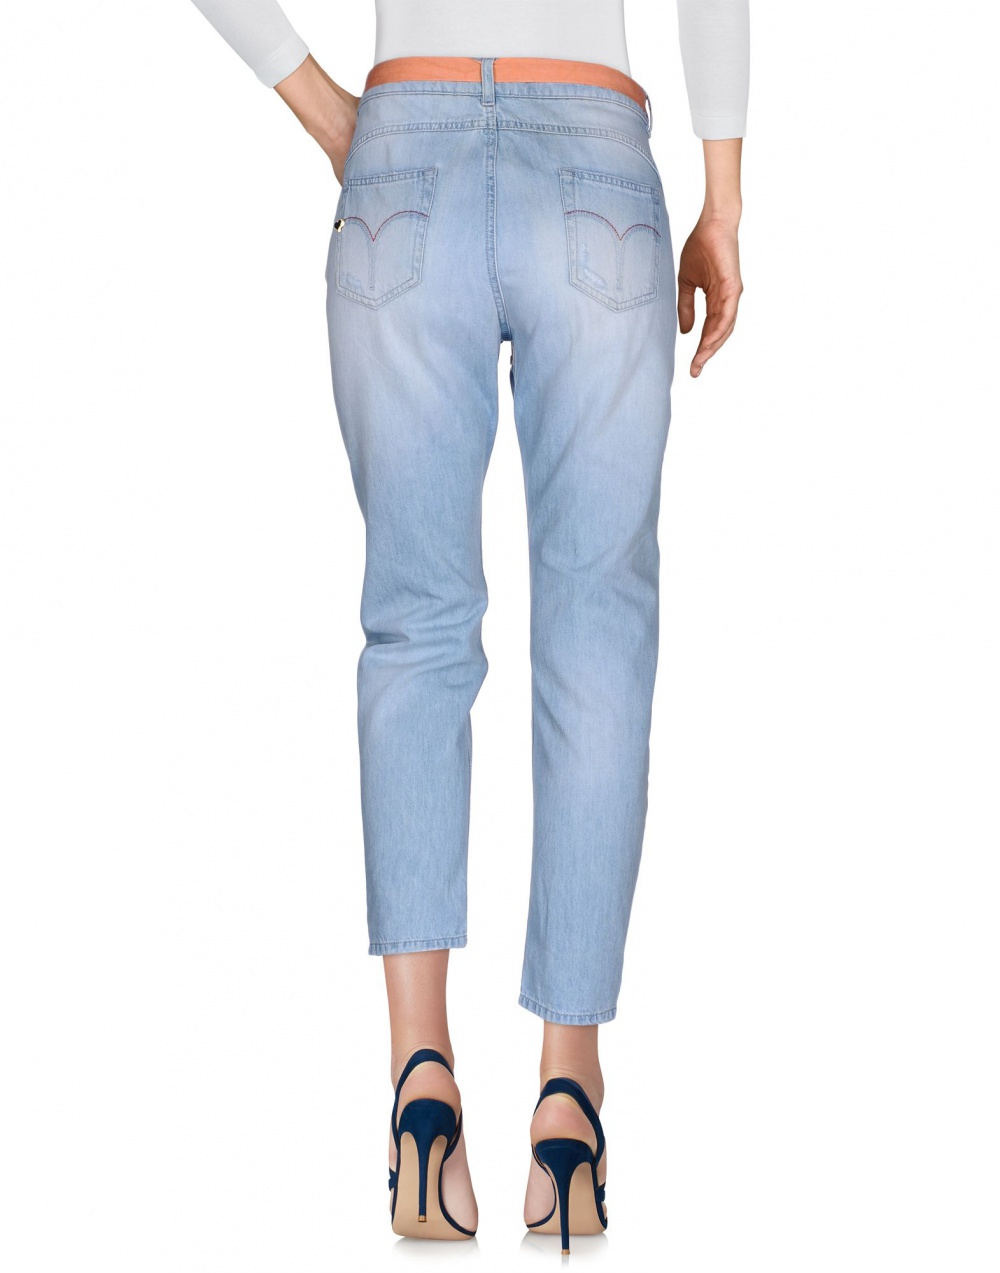 Новые джинсы TWIN-SET JEANS 29 размер